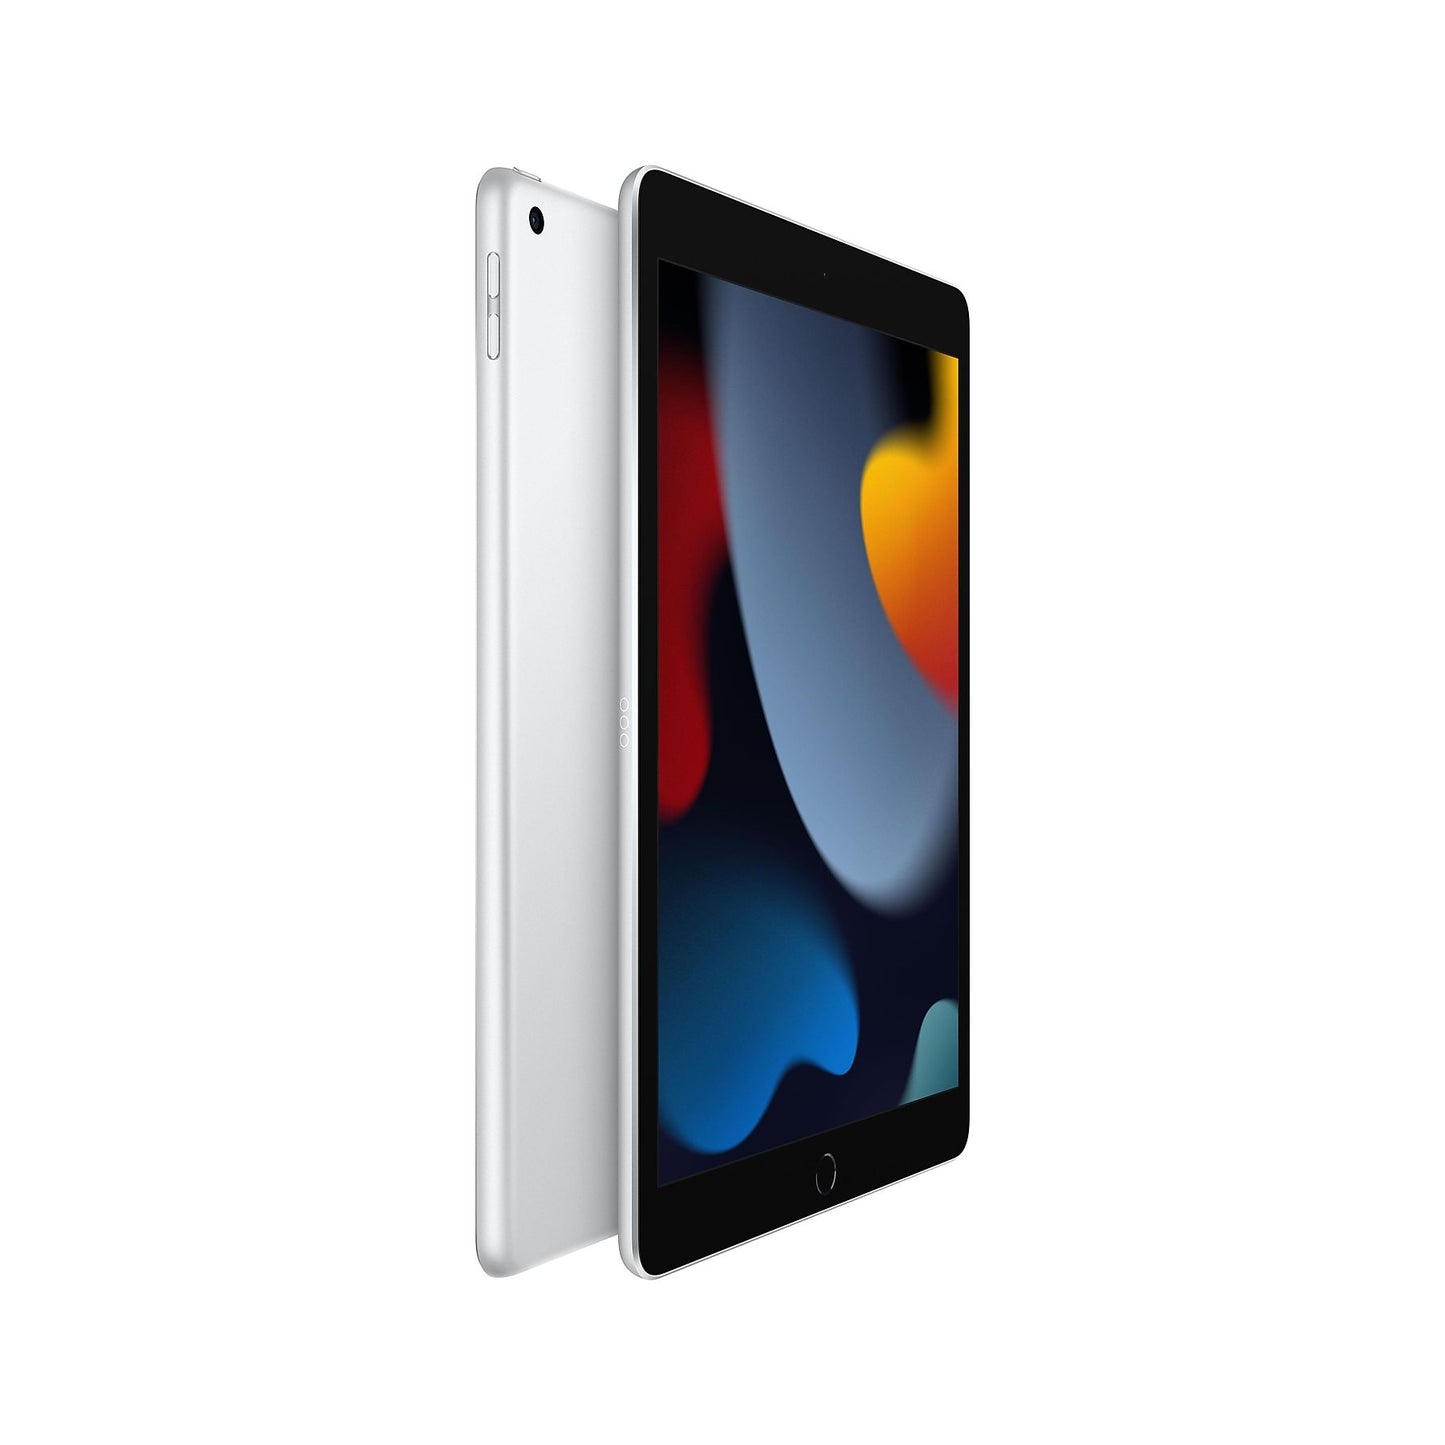 APPLE iPad Wi-Fi + Cellular (9. Generation 2021), Tablet, 64 GB, 10,2 Zoll, Silber